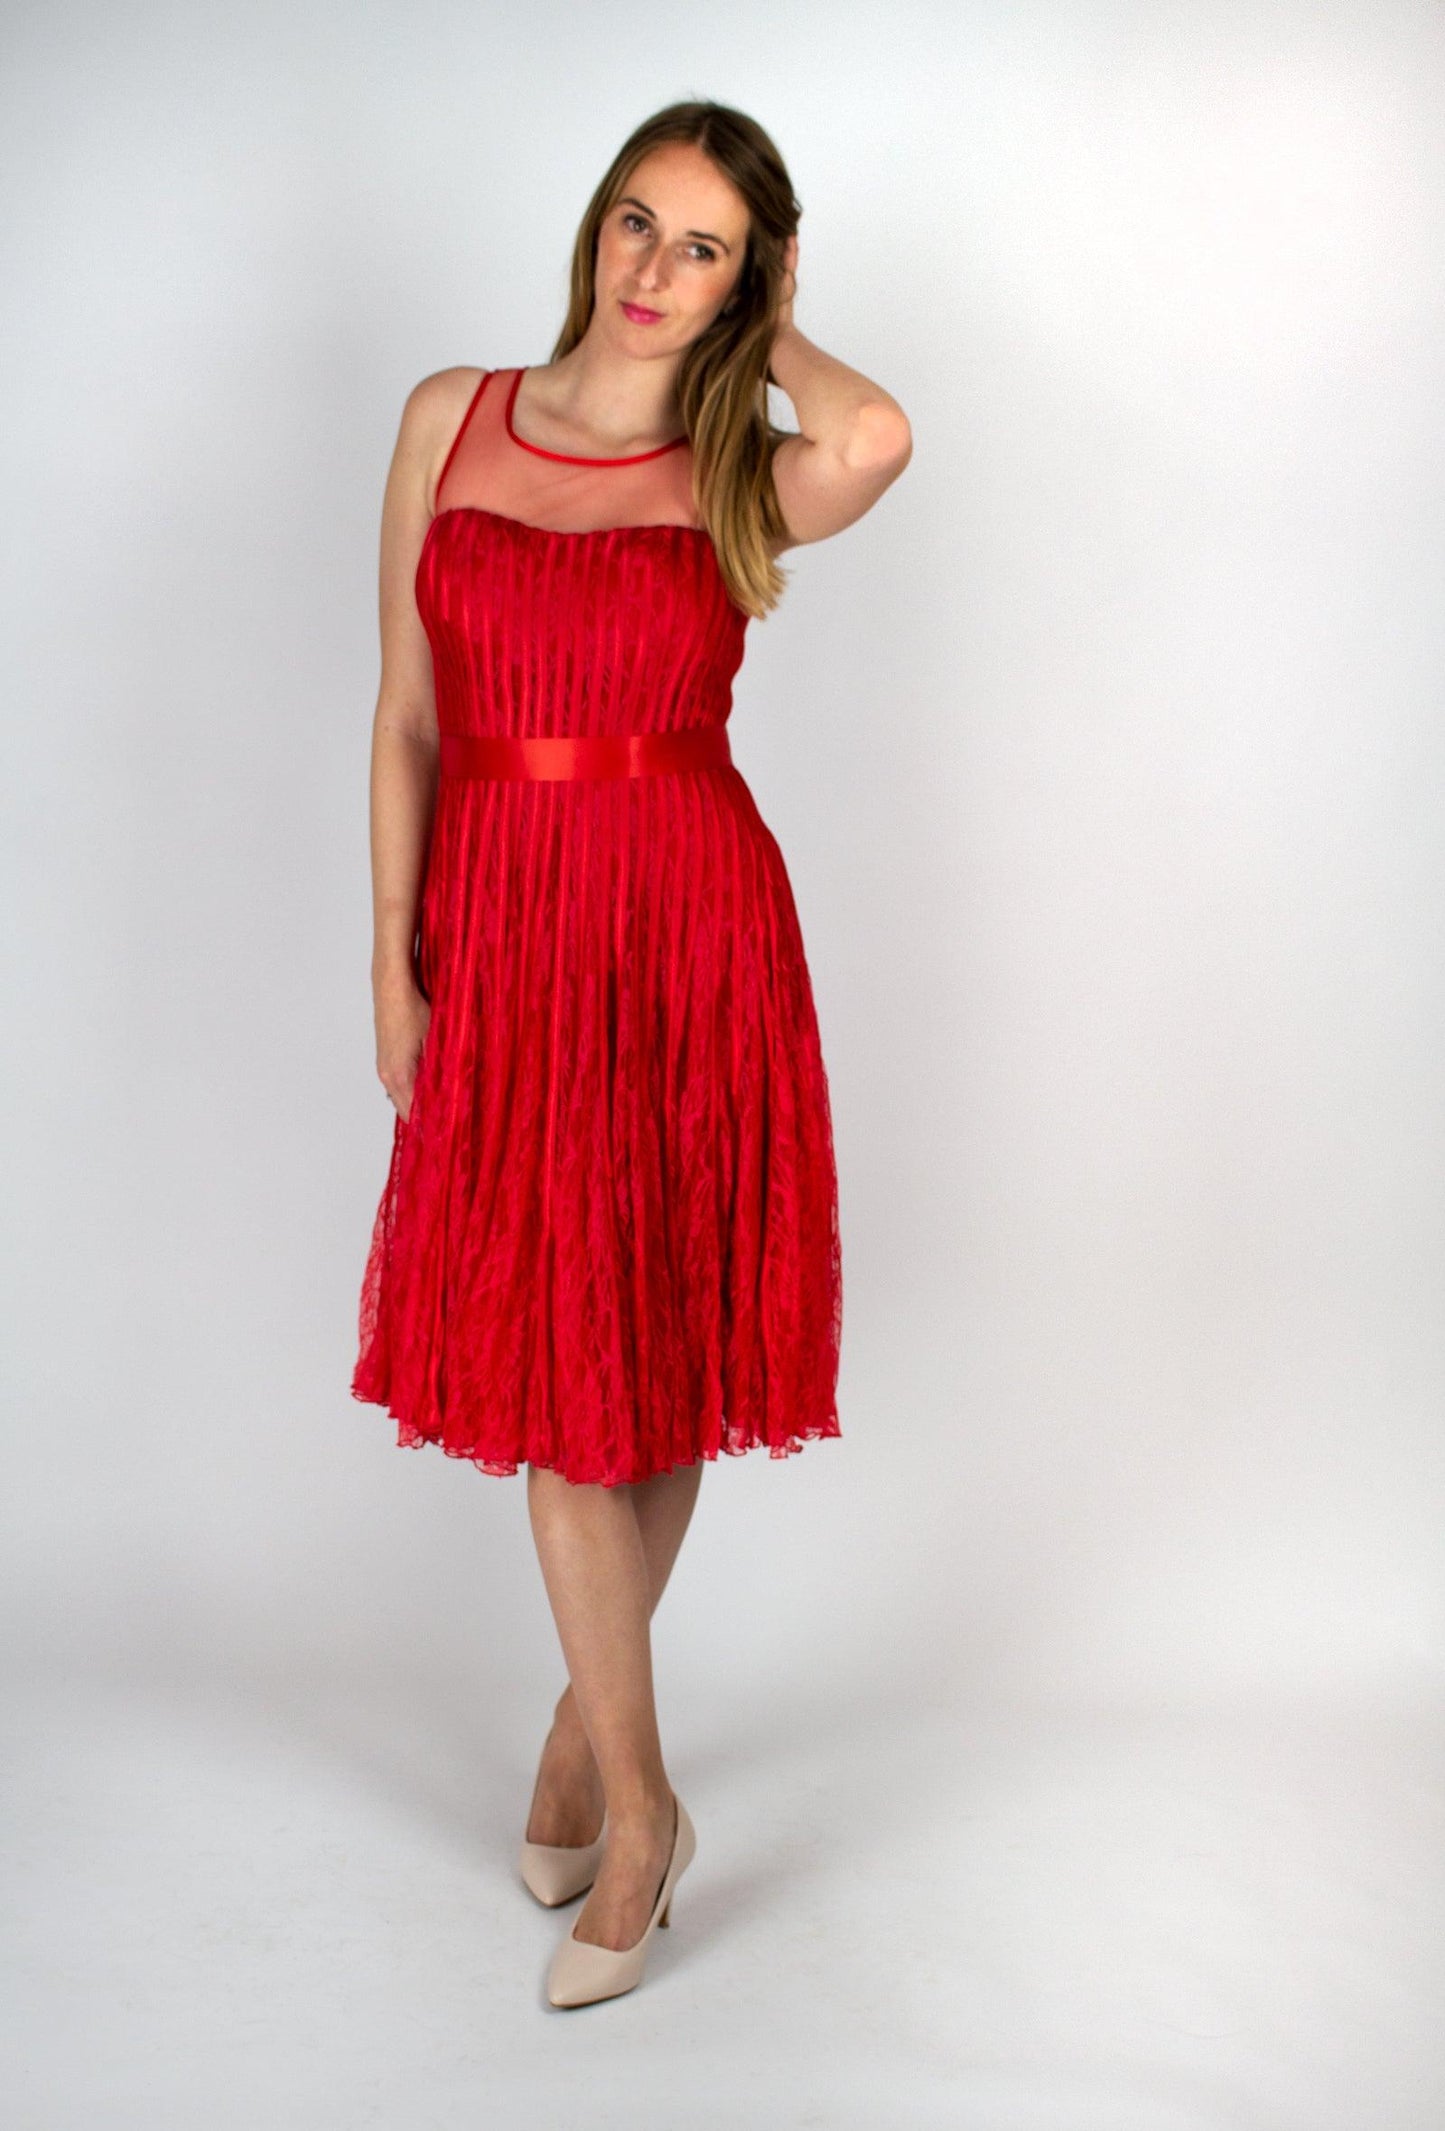 Piros csipkés menyecske ruha - Chili dresses - Ruha